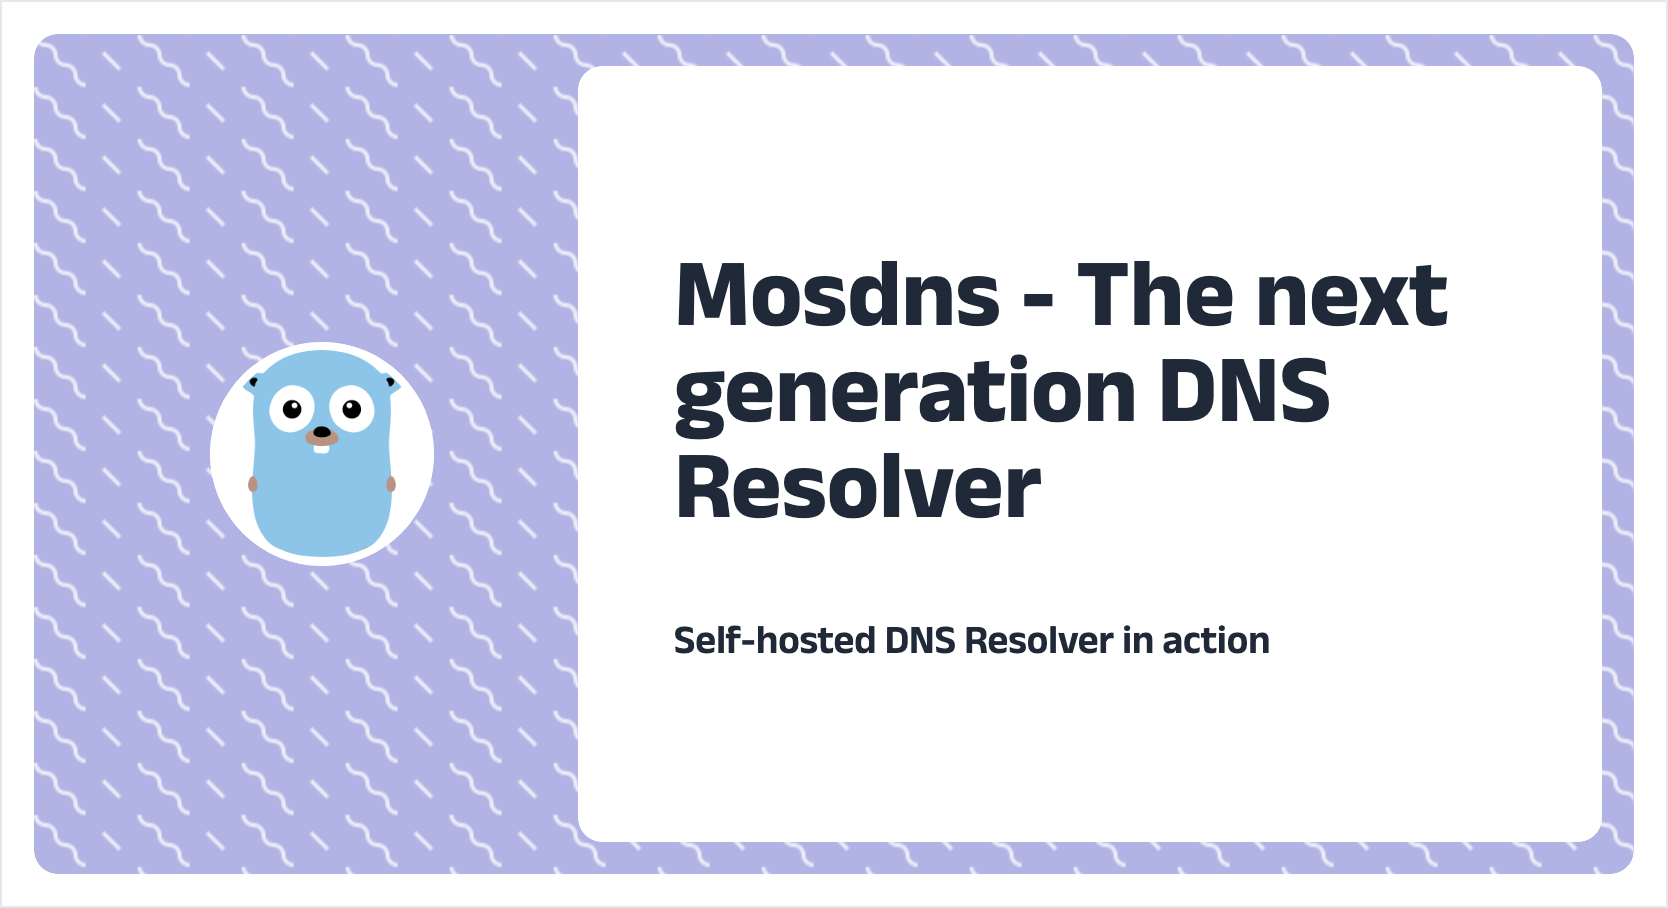 Mosdns - The next generation DNS Resolver